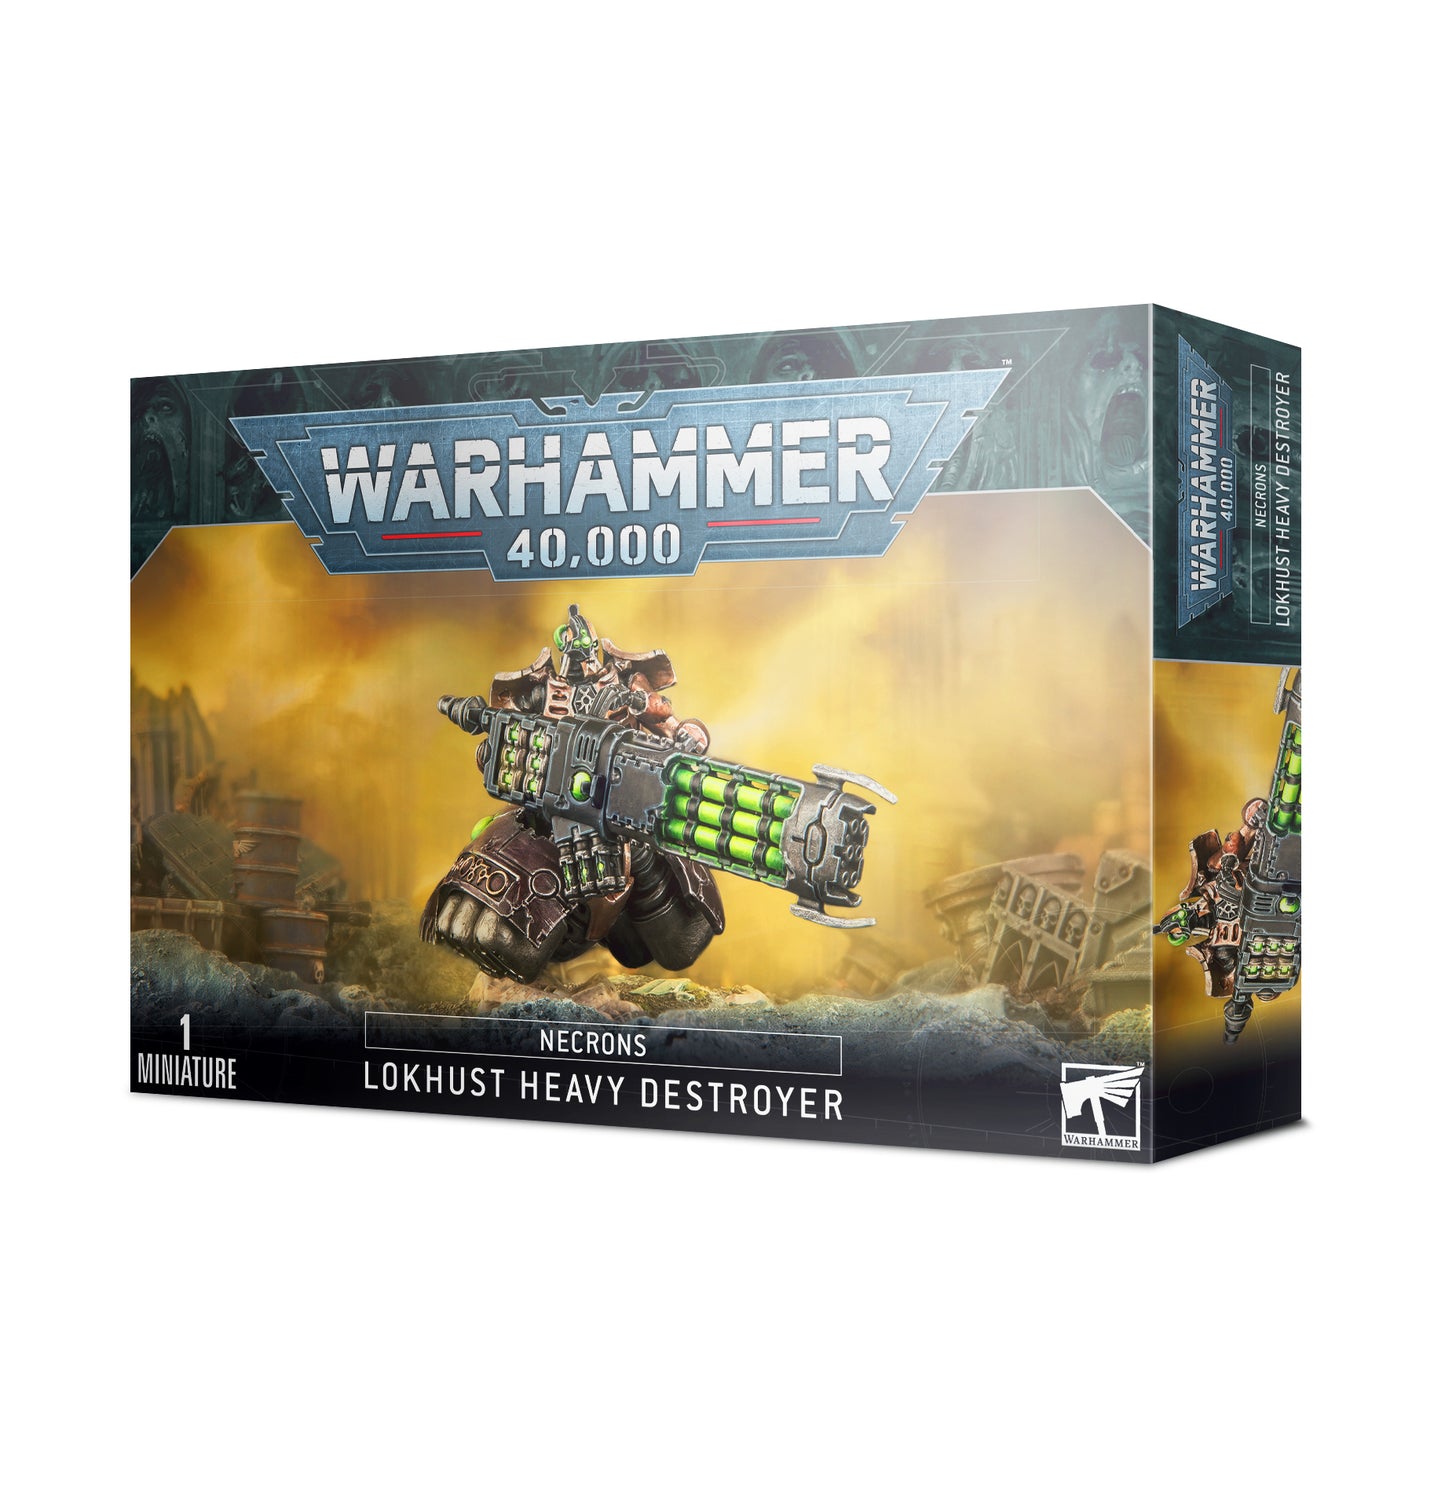 Warhammer 40,000 - Necrons Lokhust Heavy Destroyer